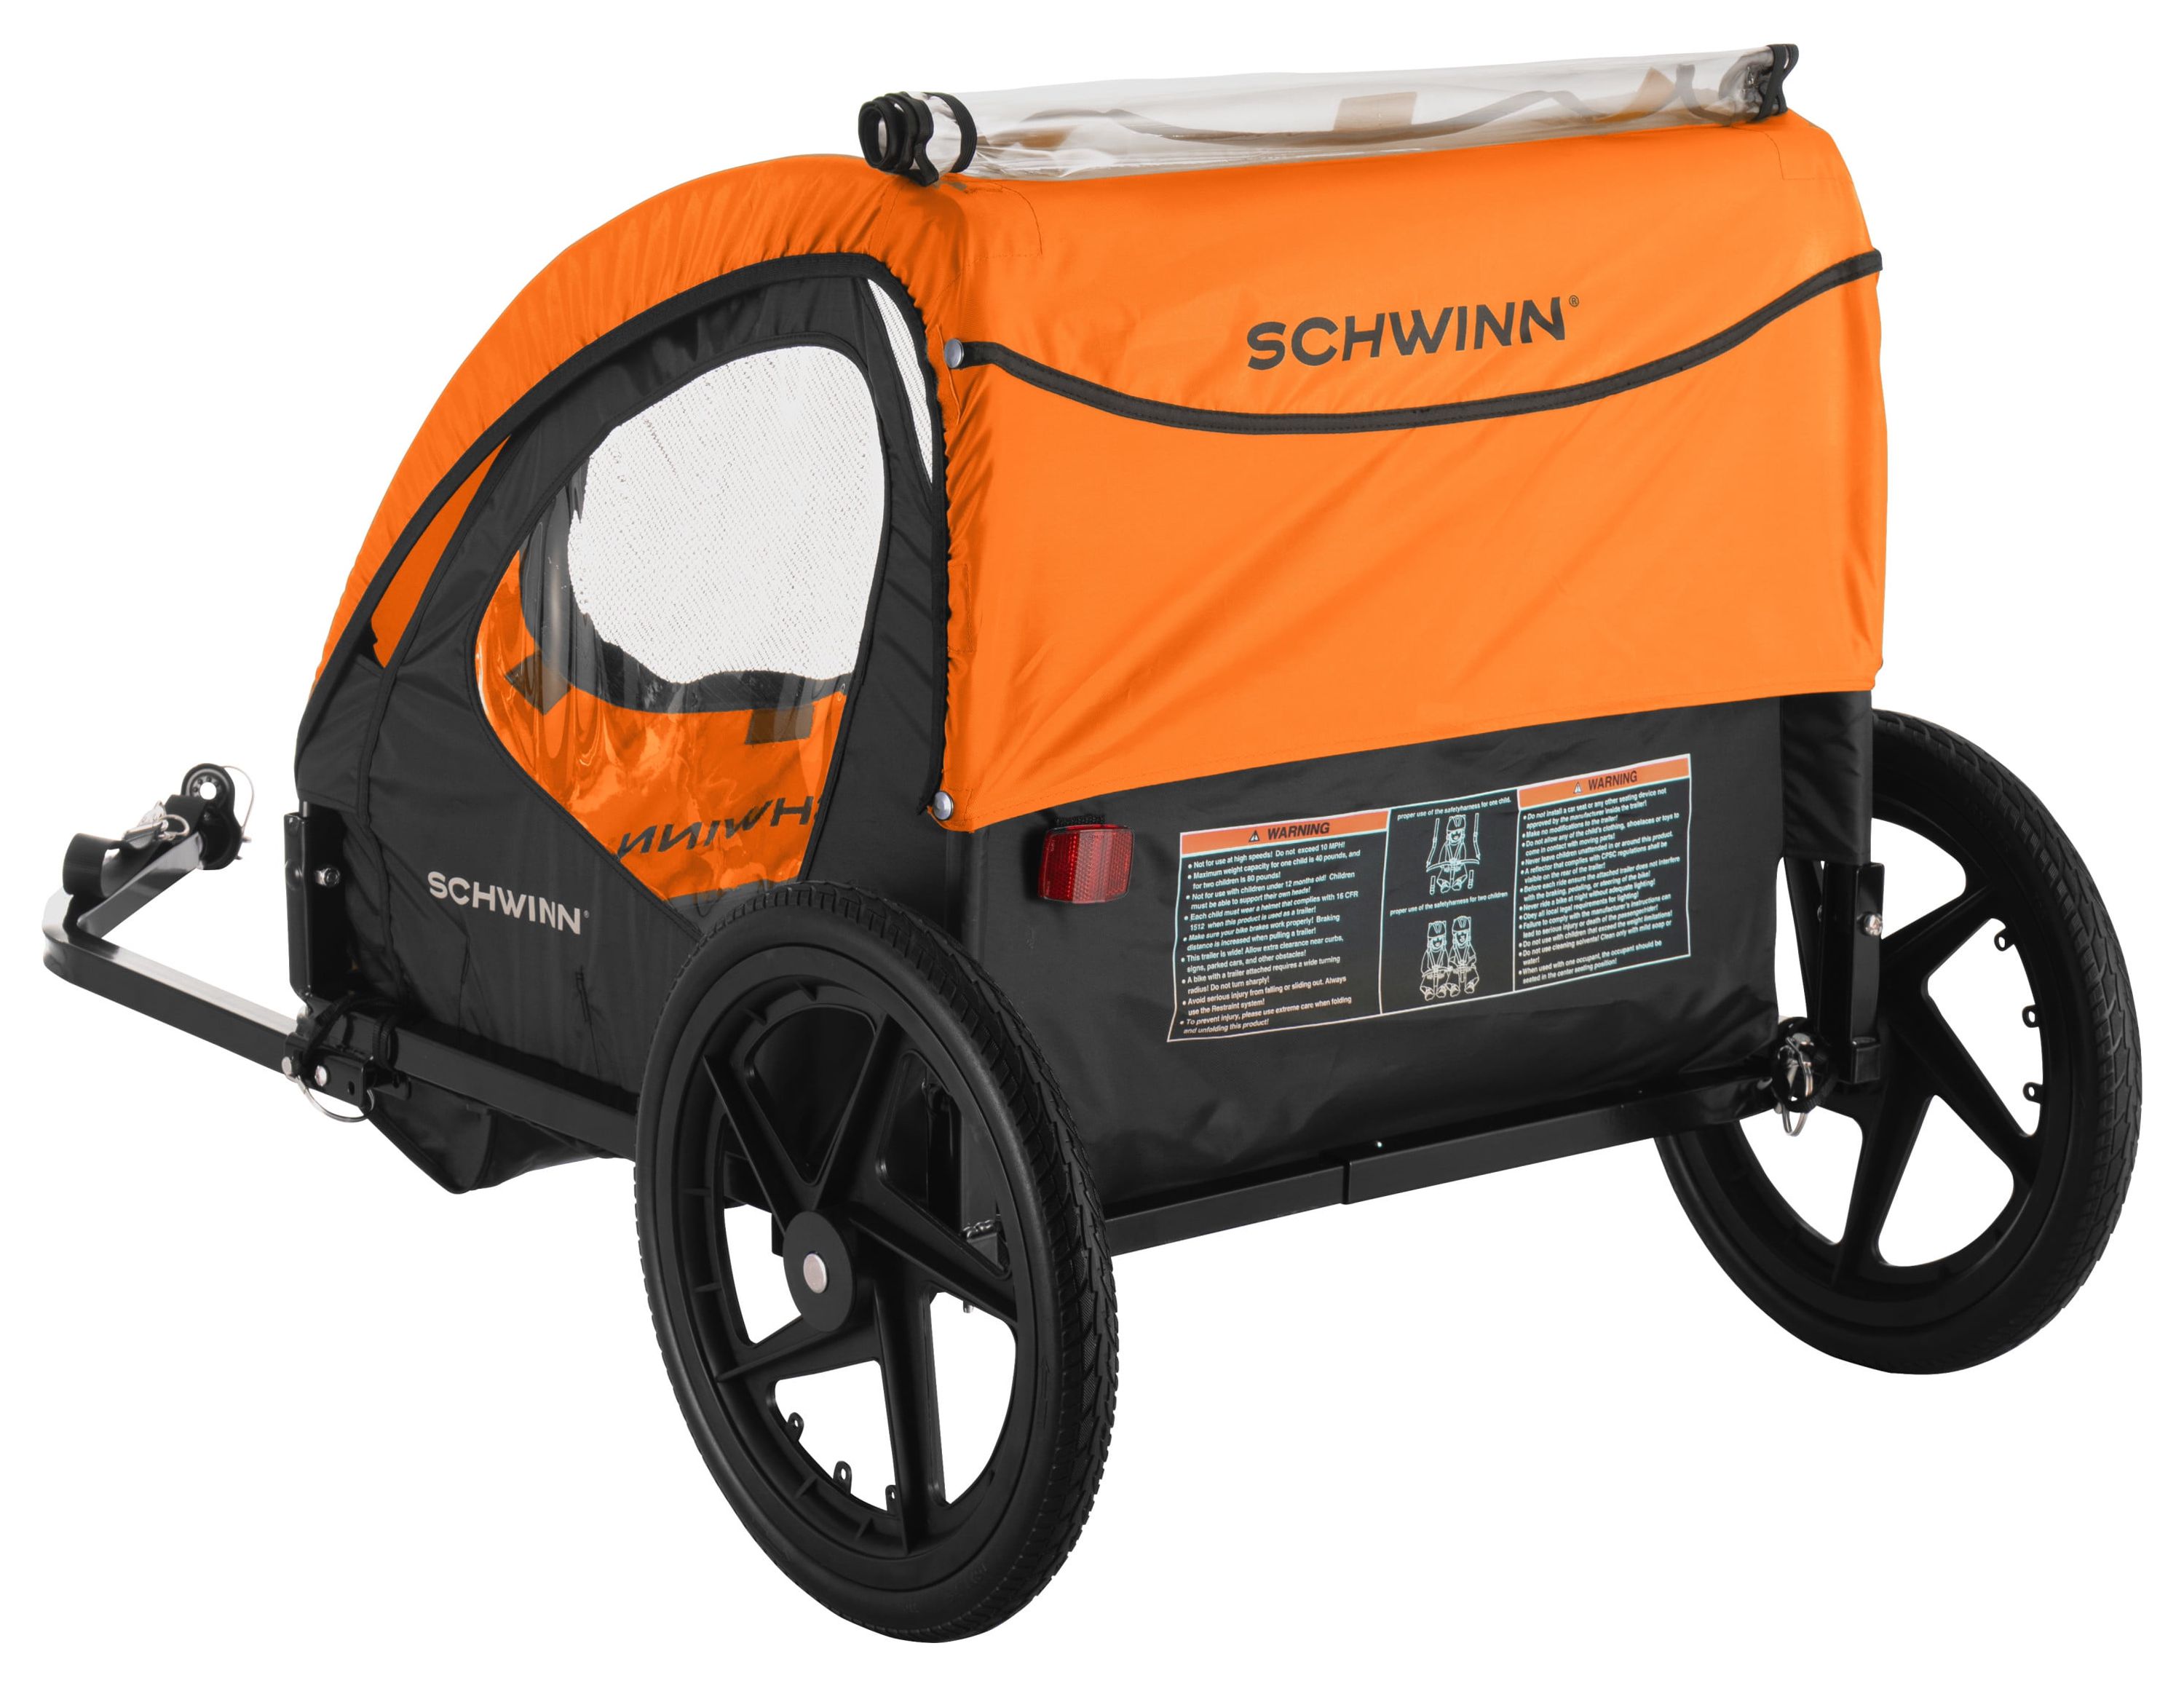 Schwinn Shuttle Foldable 2 Seat Child Bike Trailer, Orange & Black - image 4 of 8